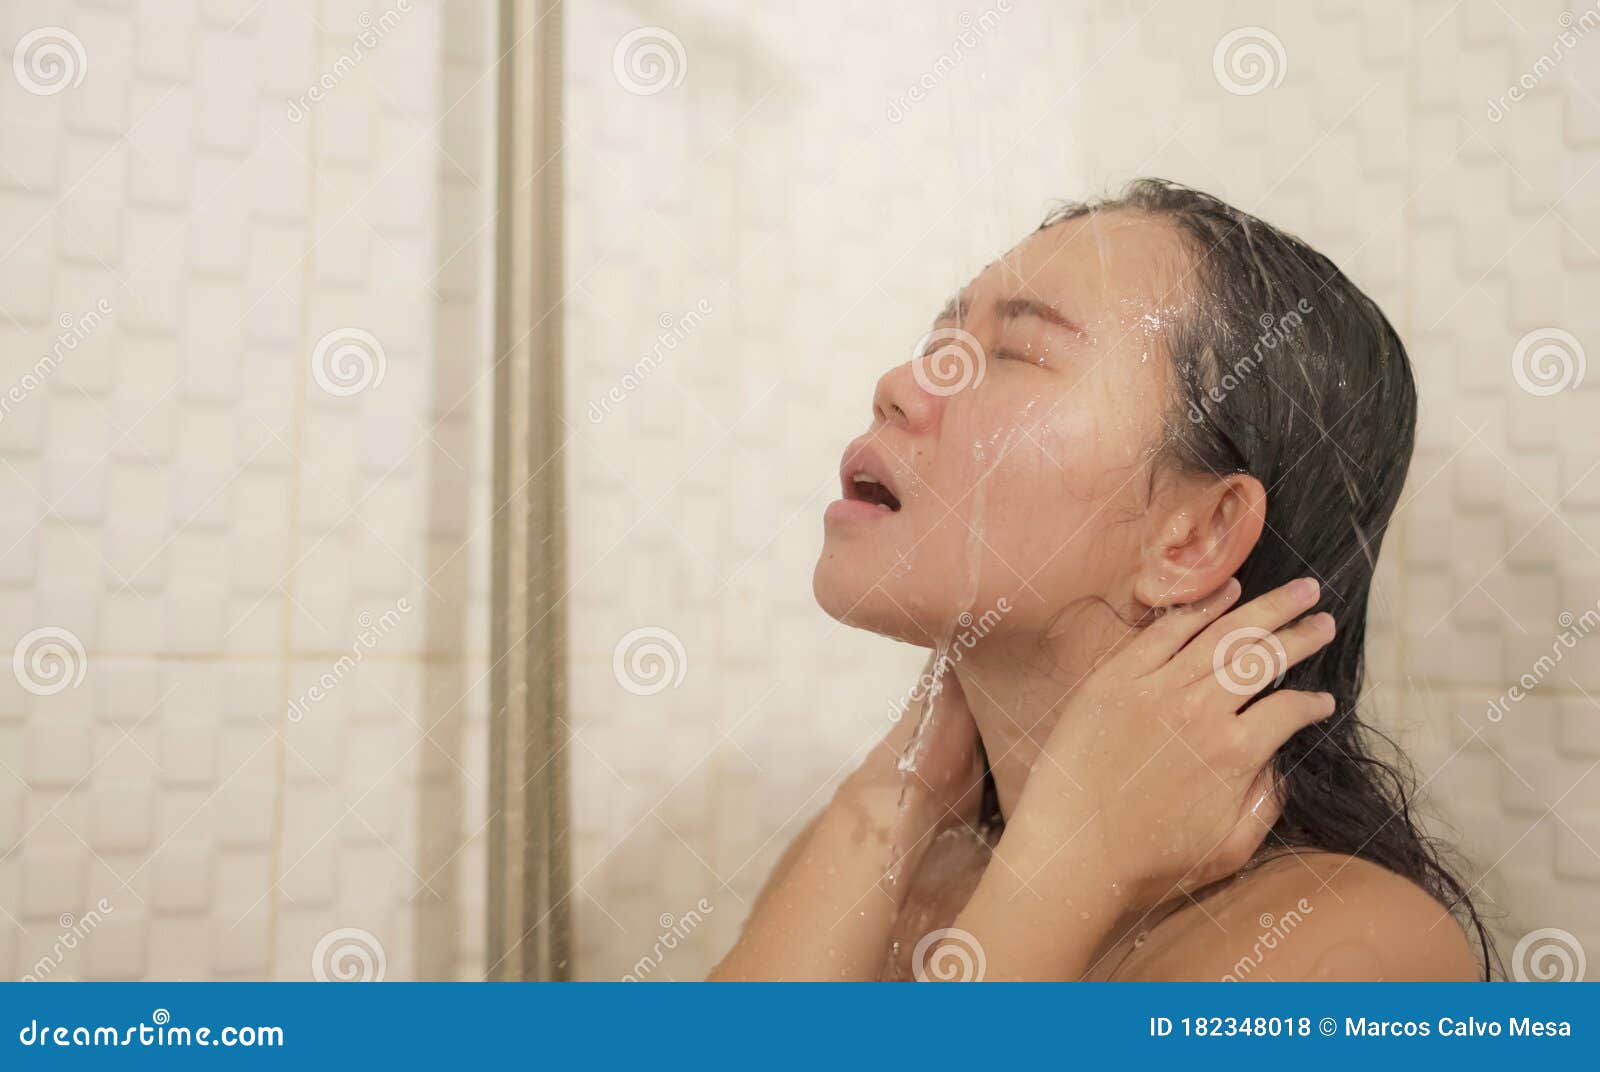 shower in Asian girls the